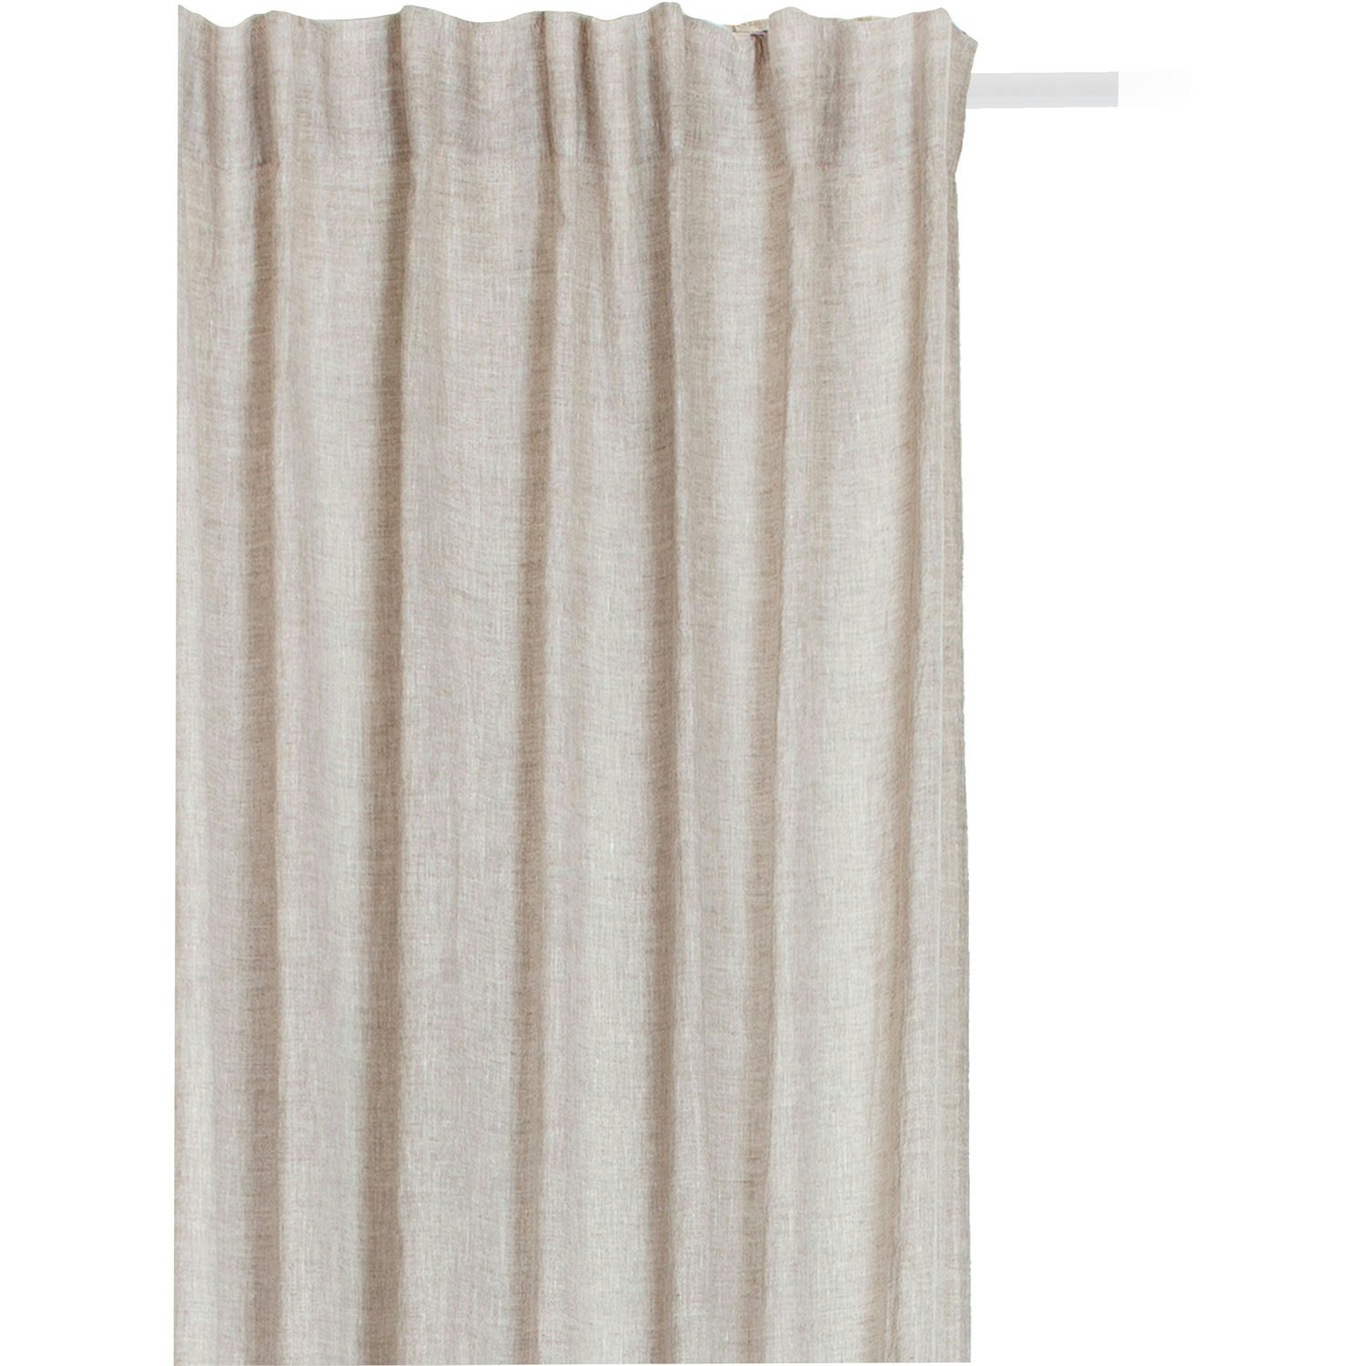 Sunrise Curtain With Pleat Band 280x290 cm, Oatmeal